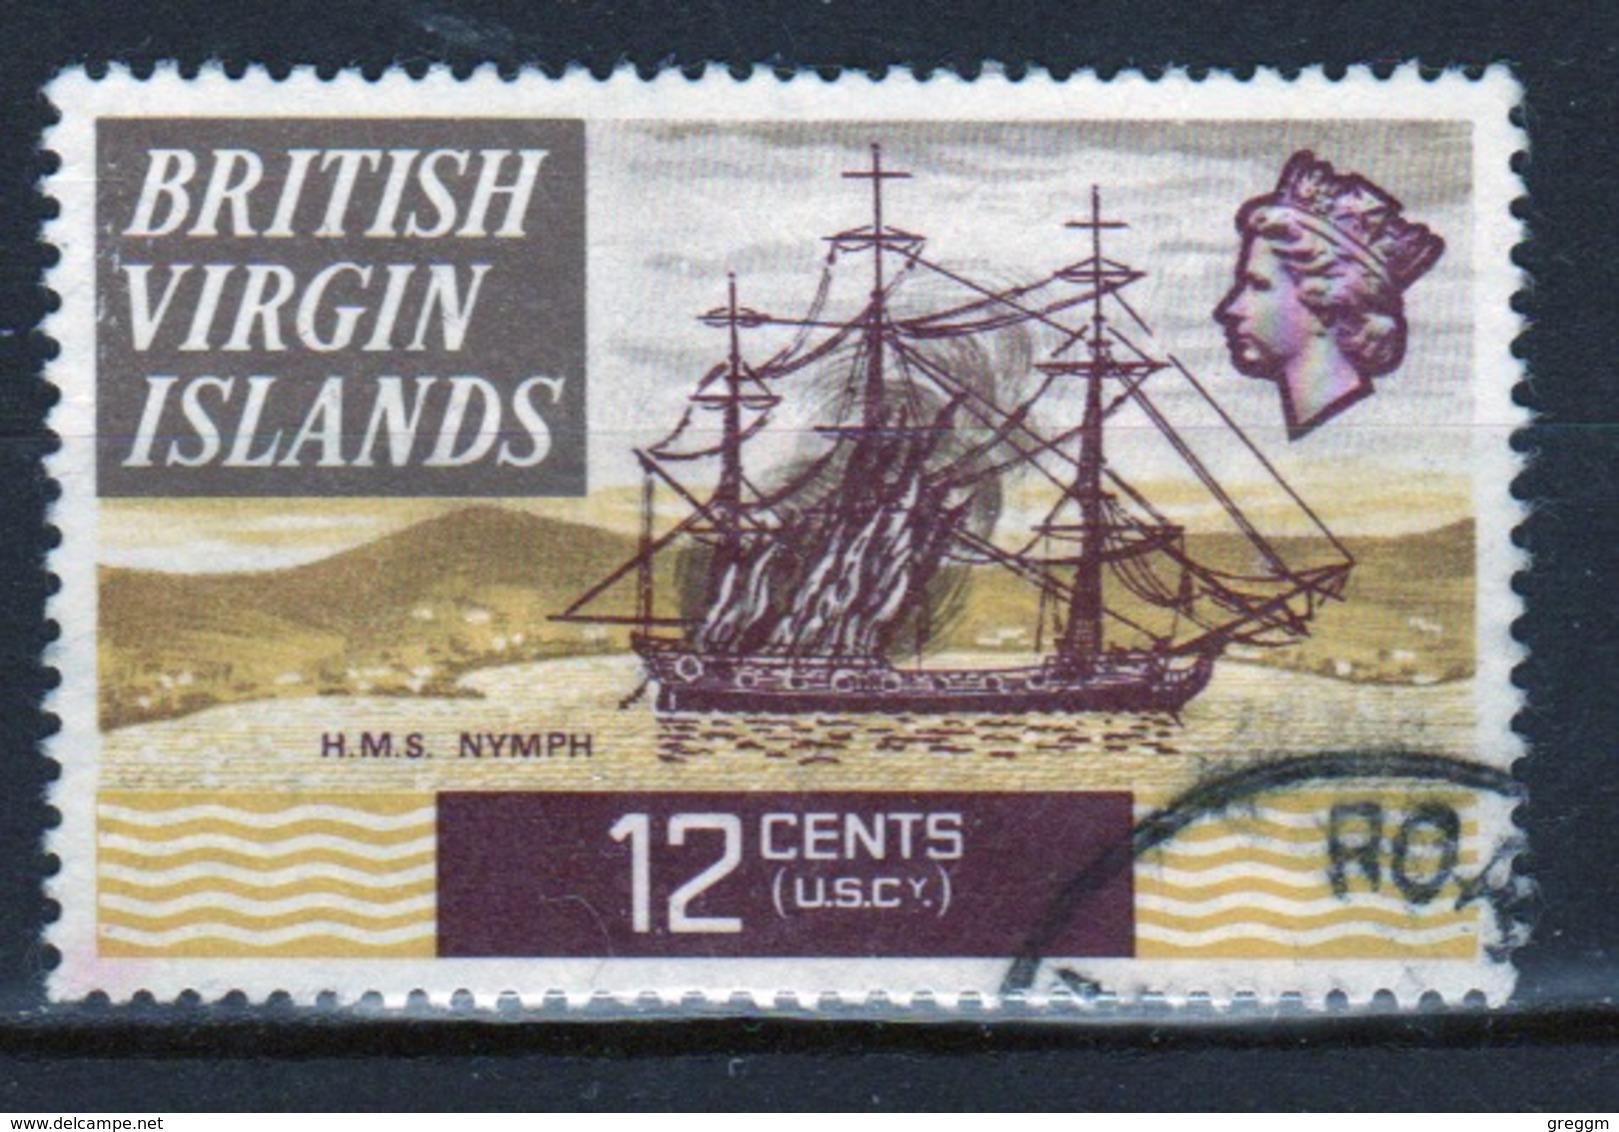 British Virgin Islands 1970 Queen Elizabeth Single 12 Cent  Stamp From The Definitive Set. - British Virgin Islands